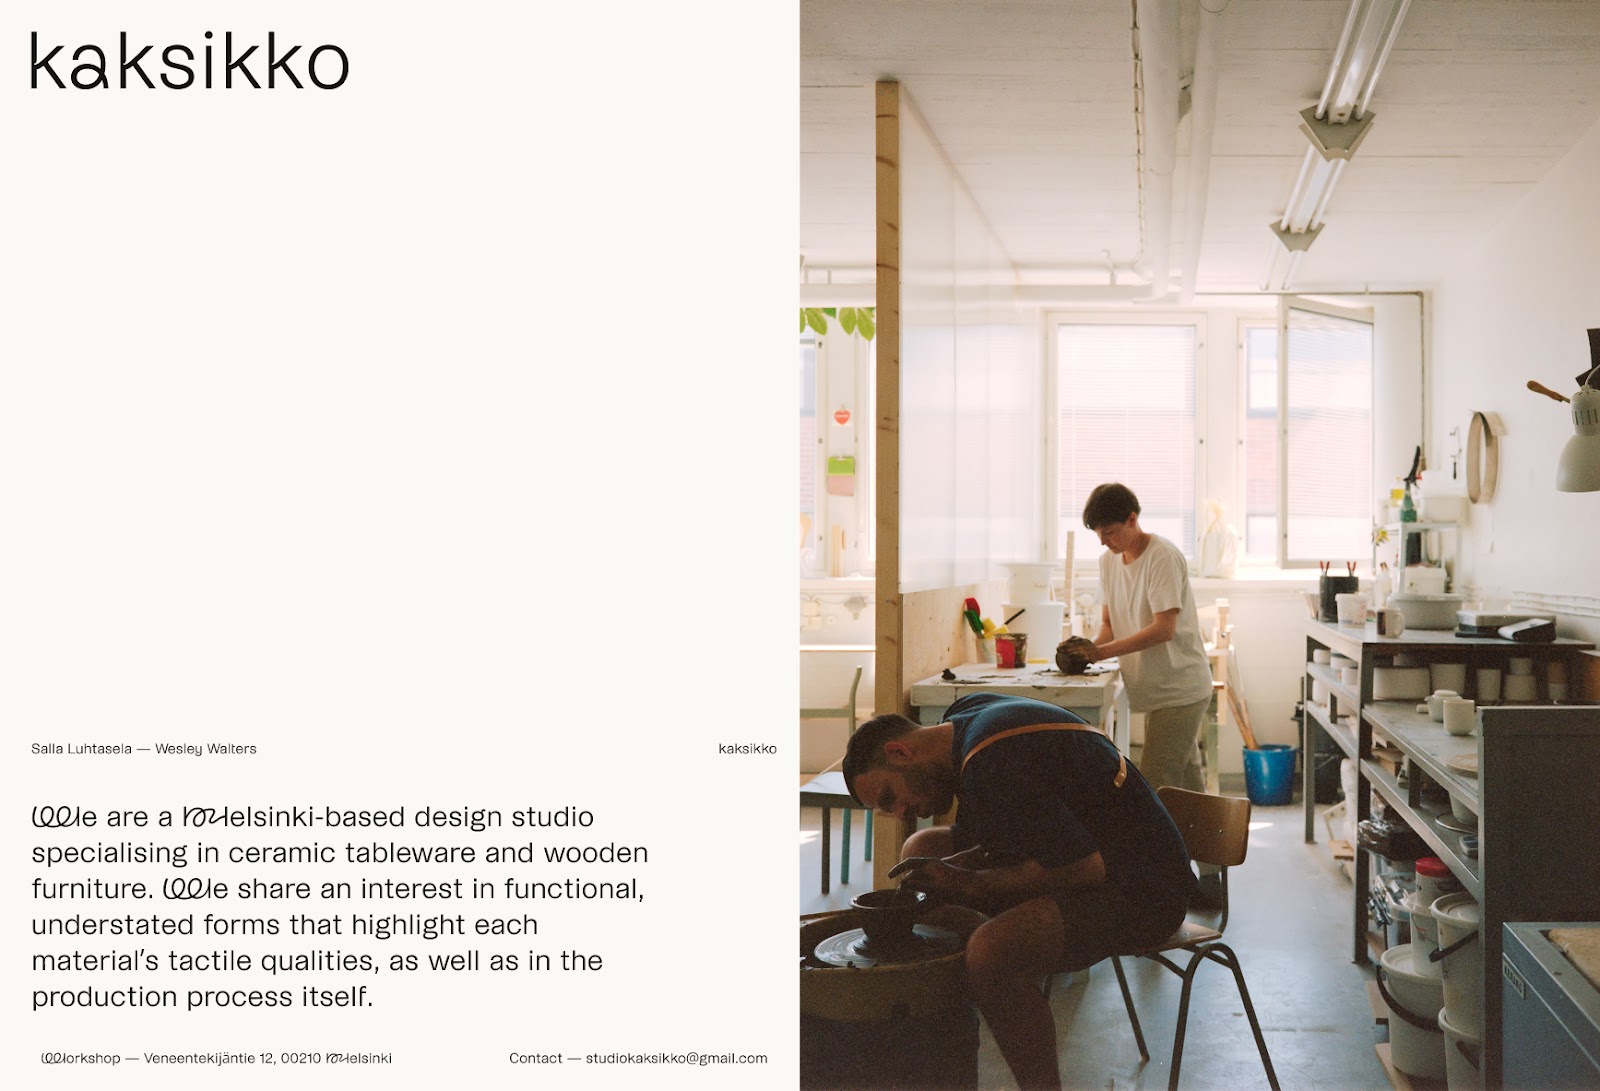 Artifact from the Crafting Kaksikko Studio's Branding: Clean, Inviting Visual Identity article on Abduzeedo